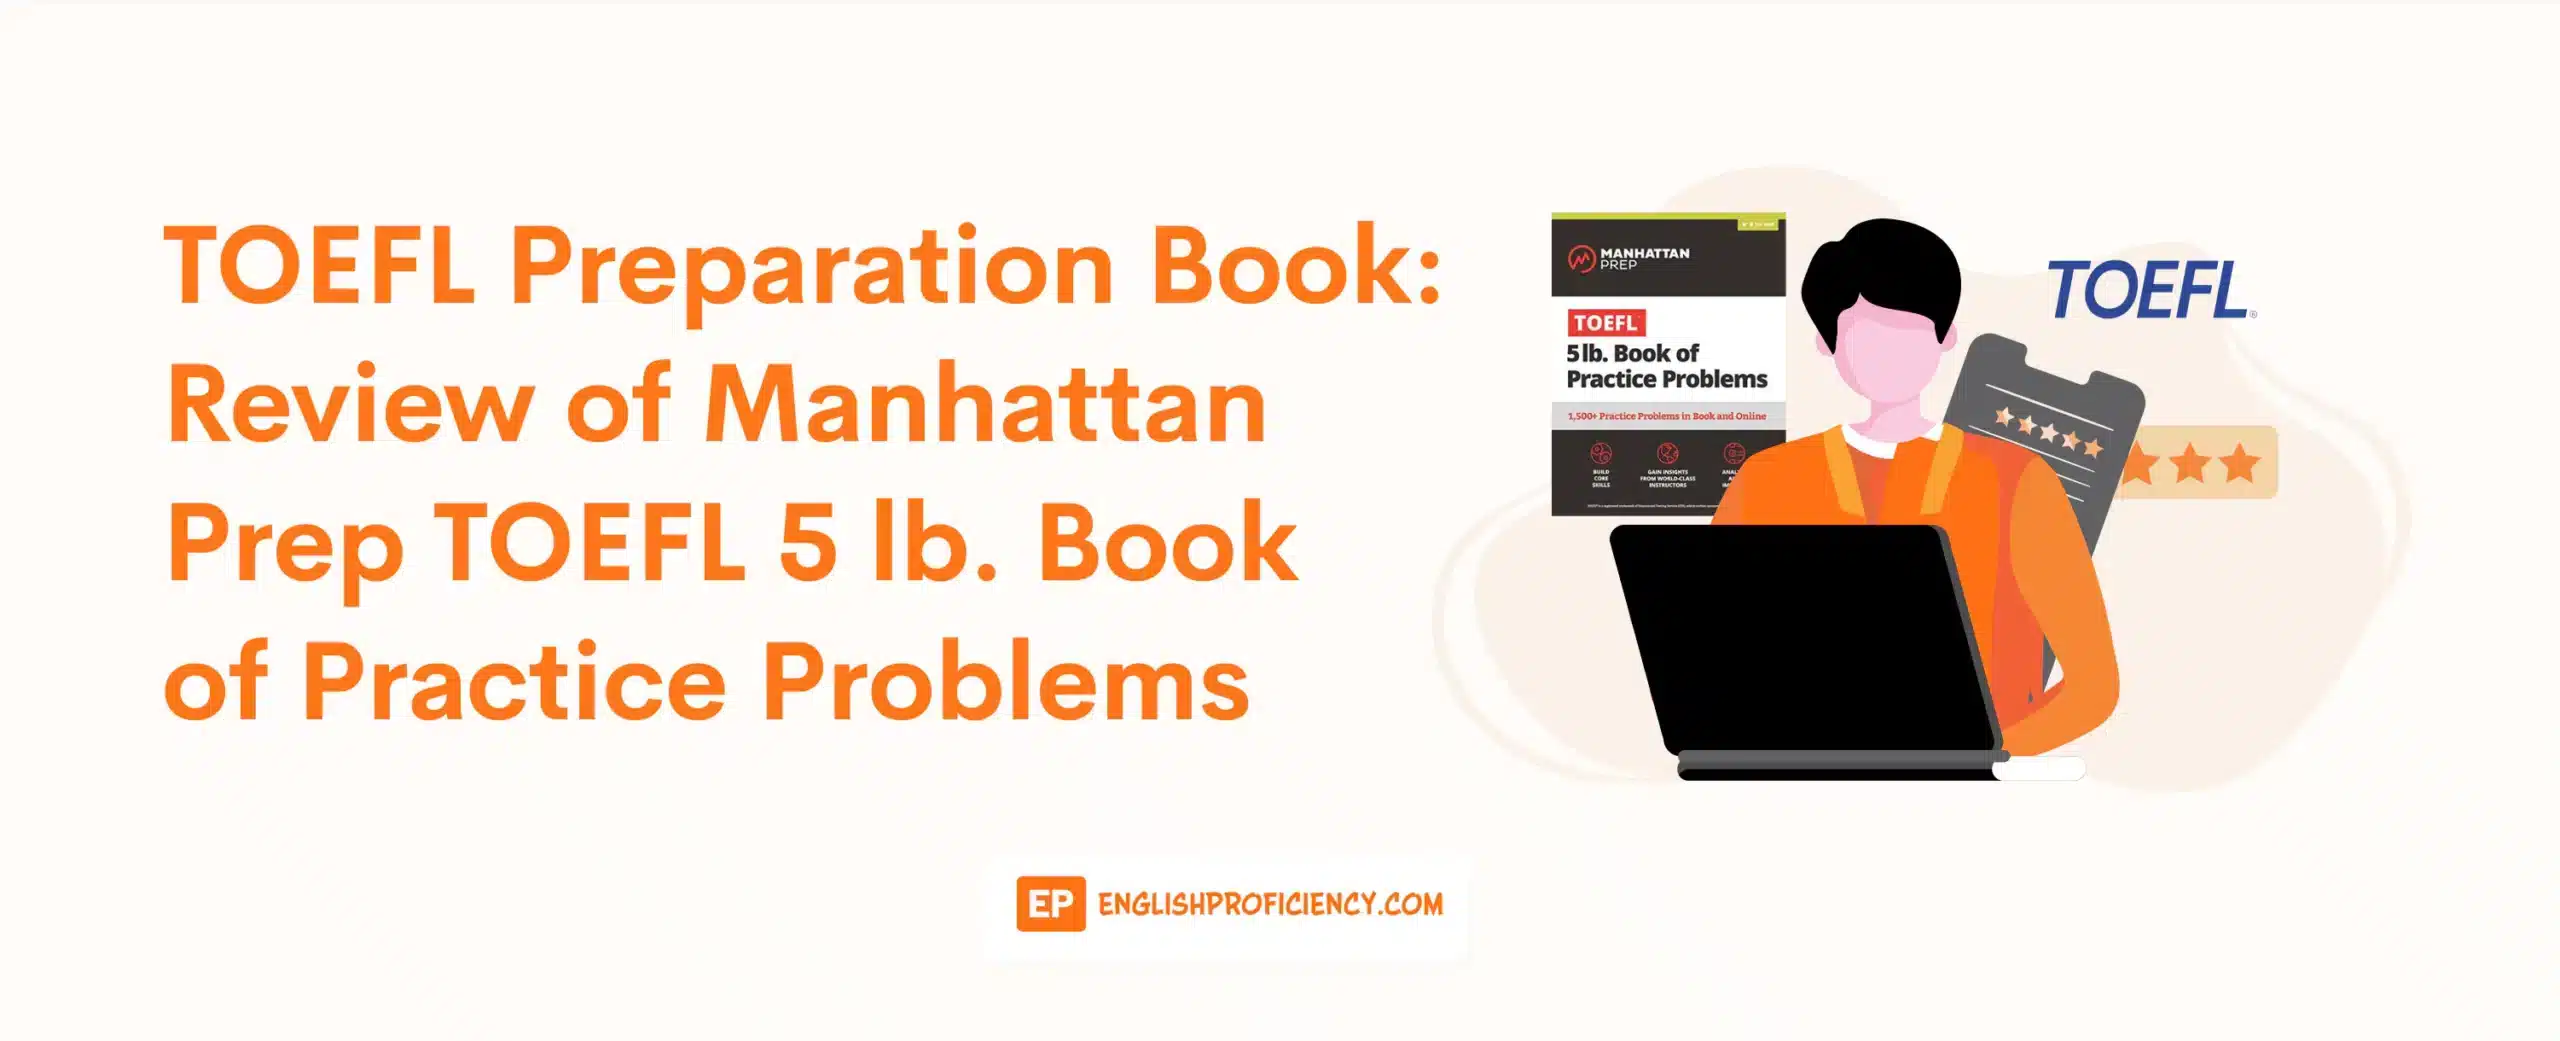 TOEFL Preparation Book Review of Manhattan Prep TOEFL 5 lb Book of Practice Problems